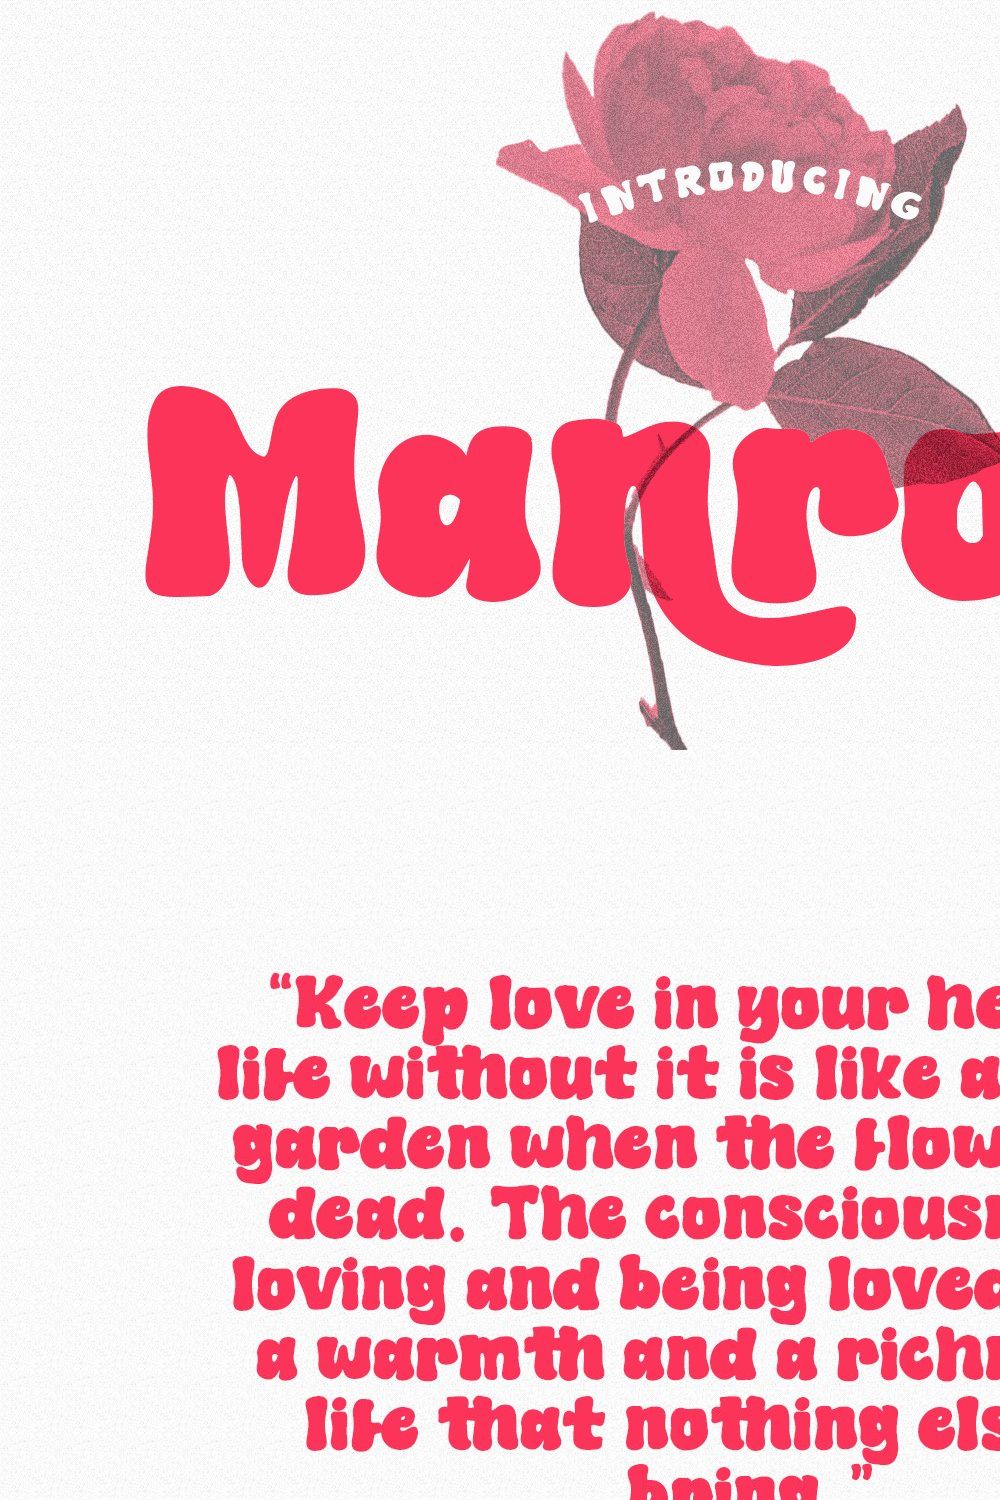 Manrose Handwritten Font pinterest preview image.